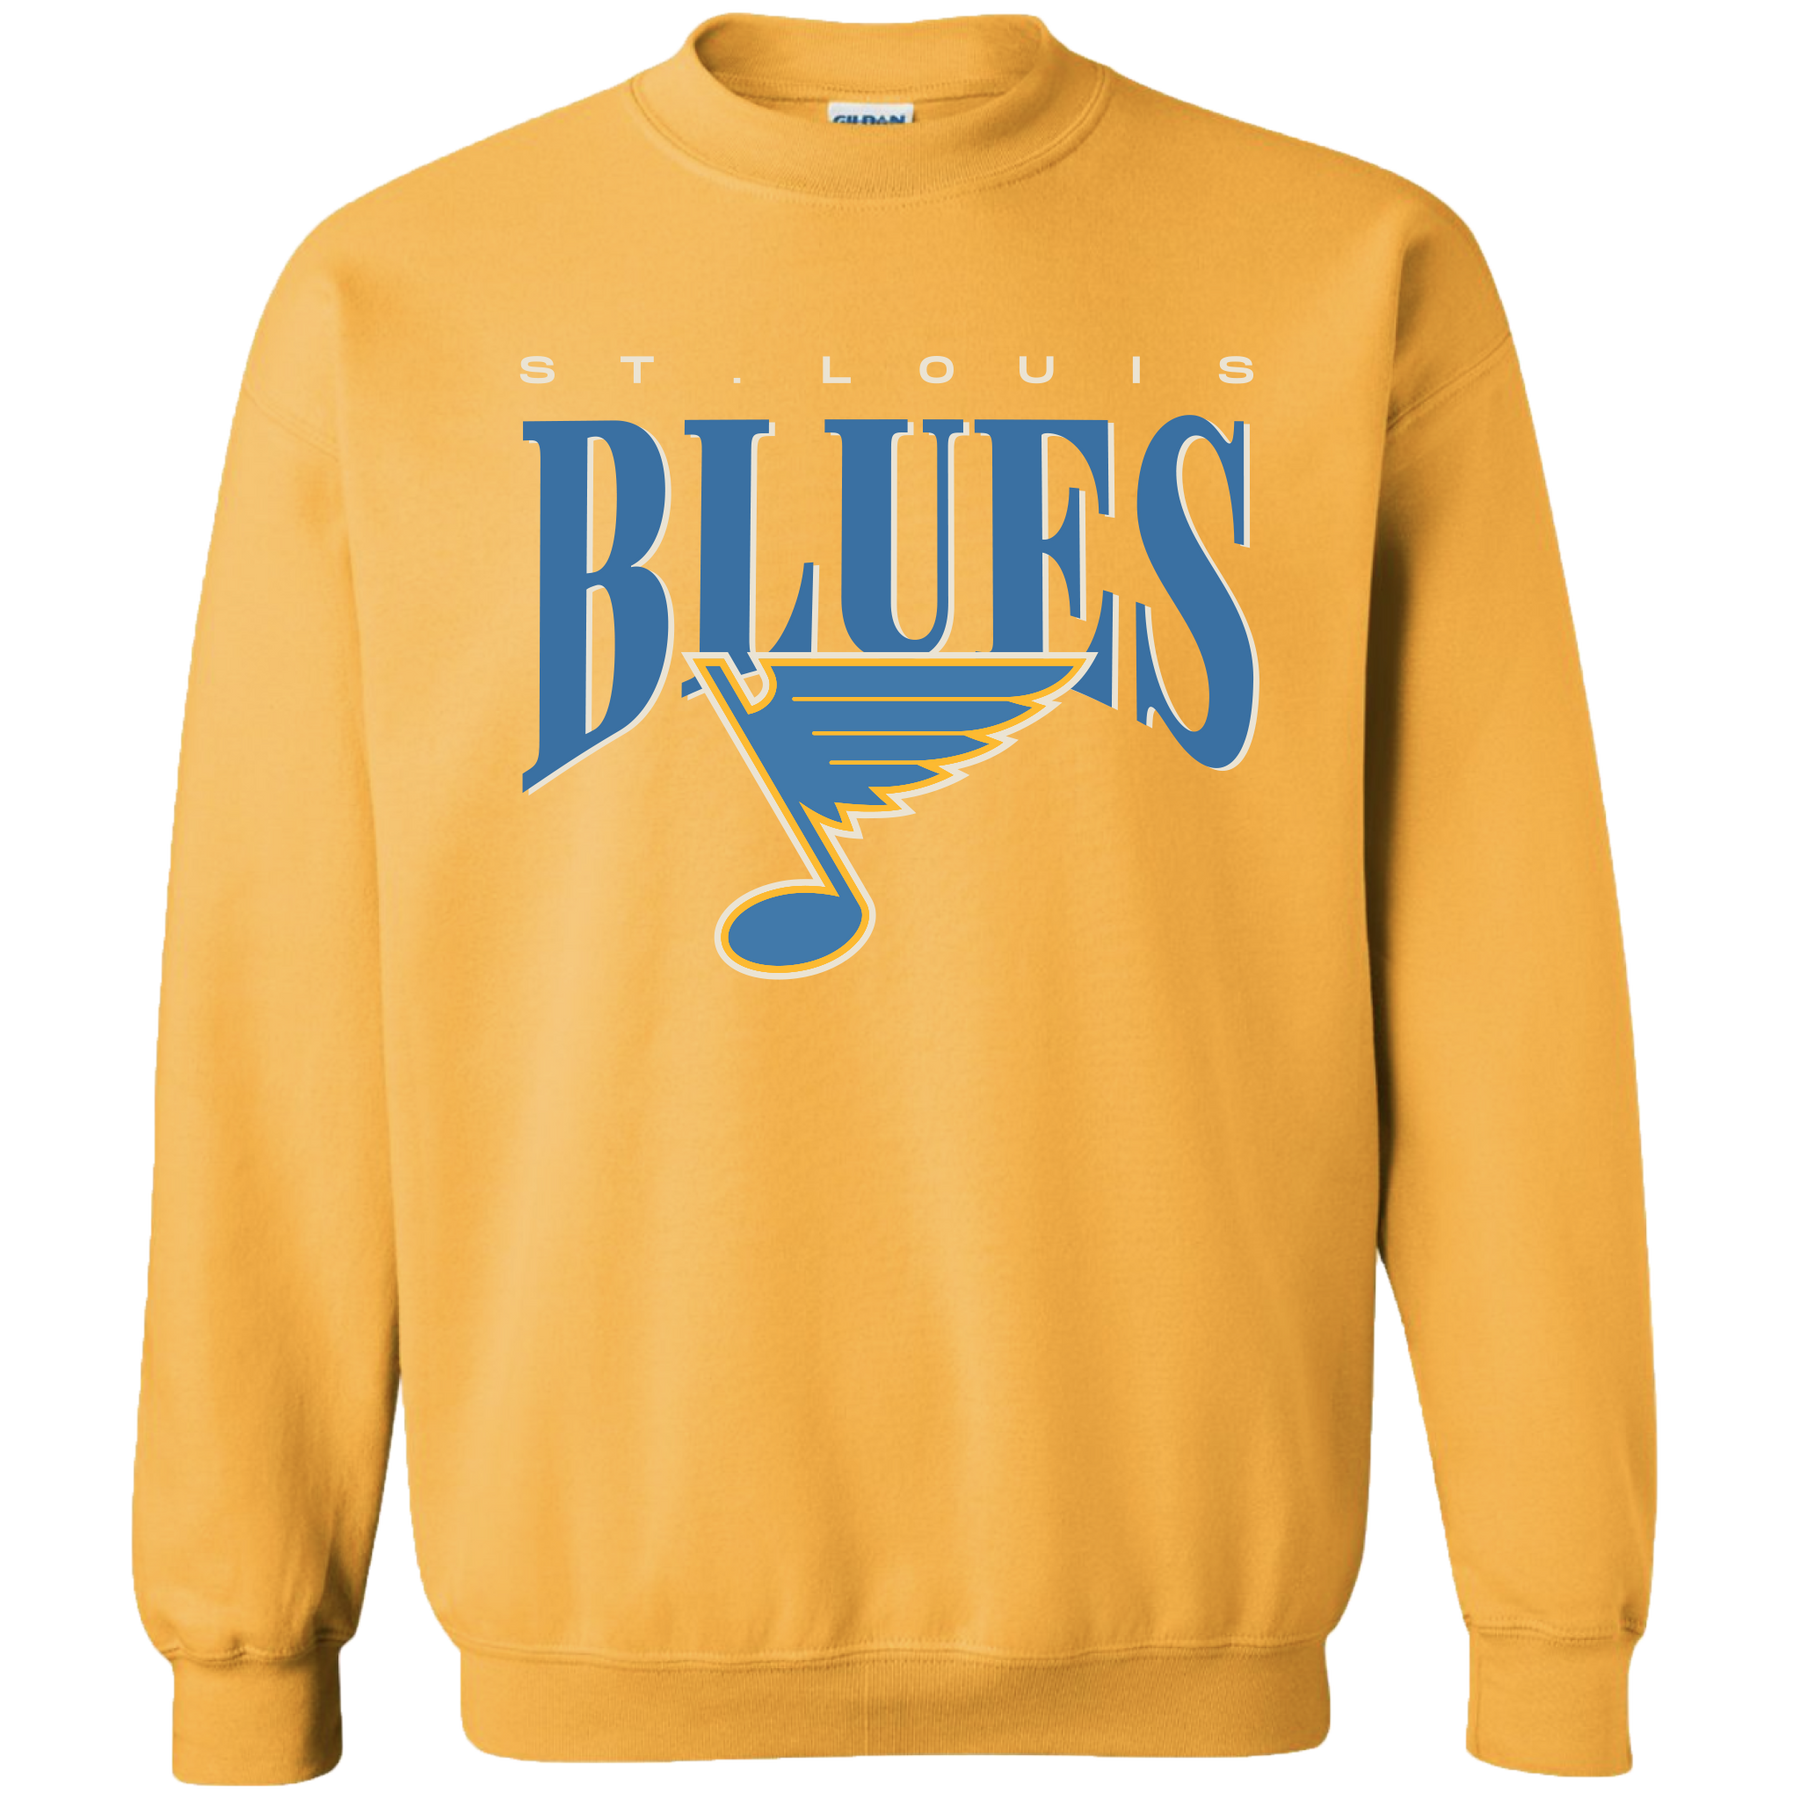 Vintage St Louis Blues Crewneck Sweatshirt – For All To Envy